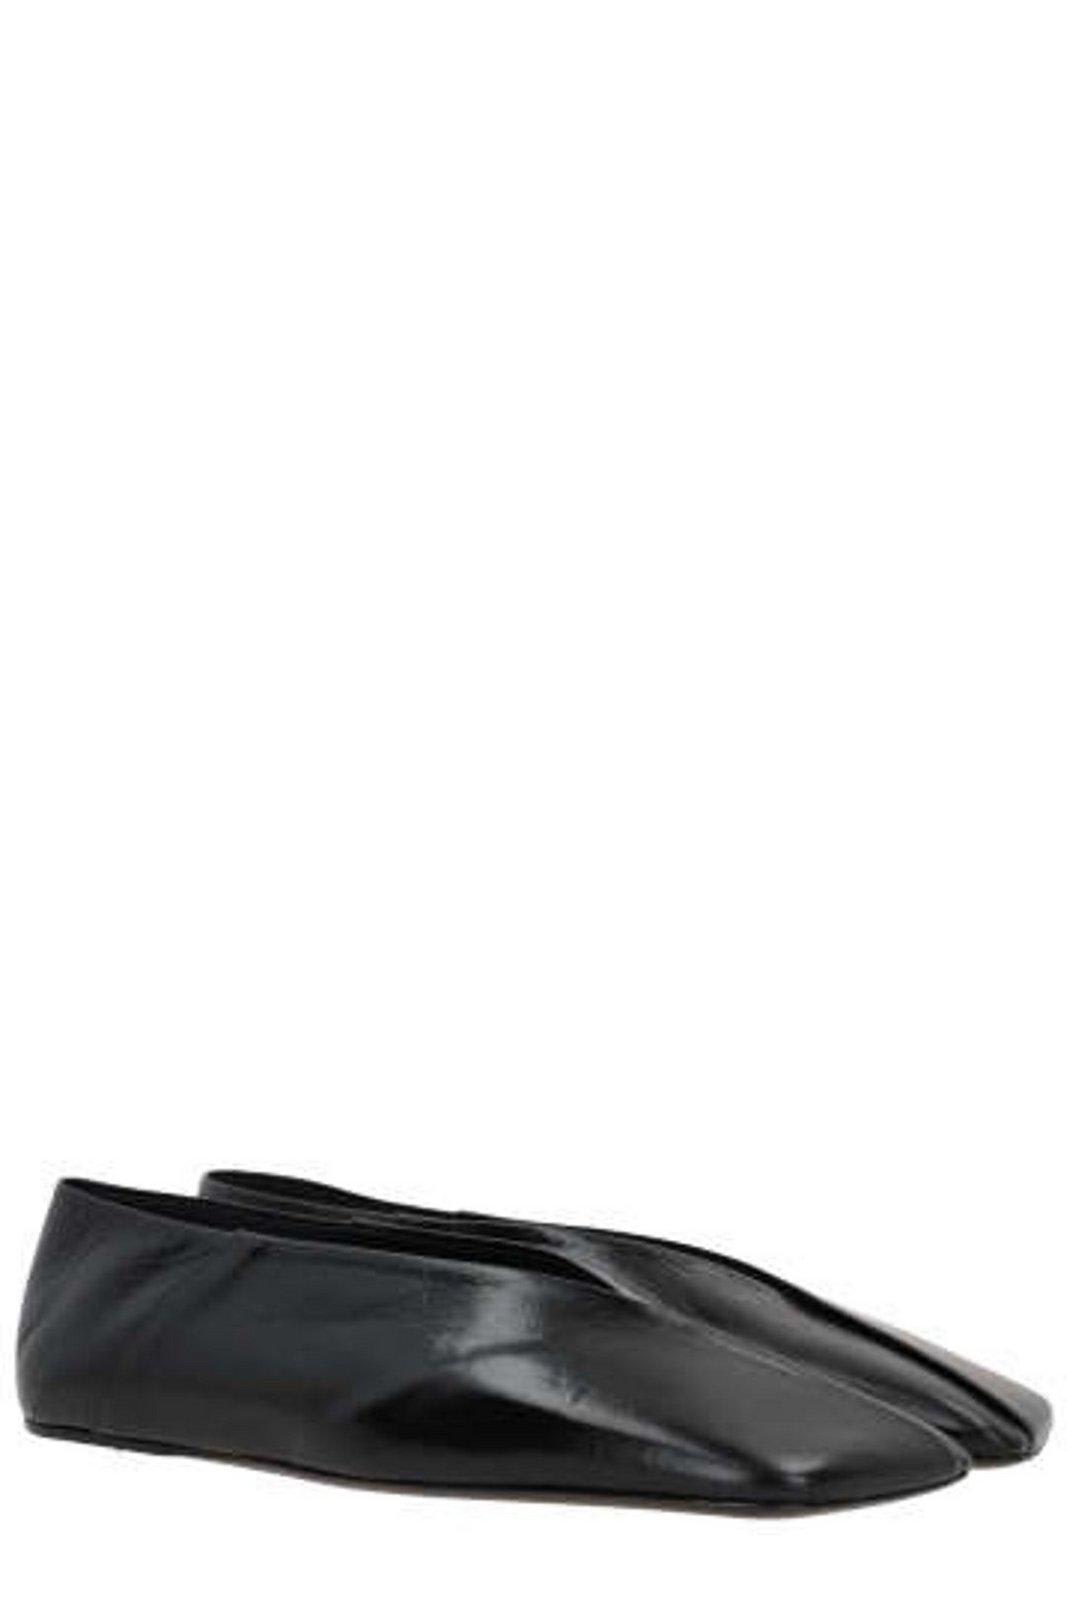 Shop Jil Sander Asymmetric Square Toe Ballerina Shoes In Black